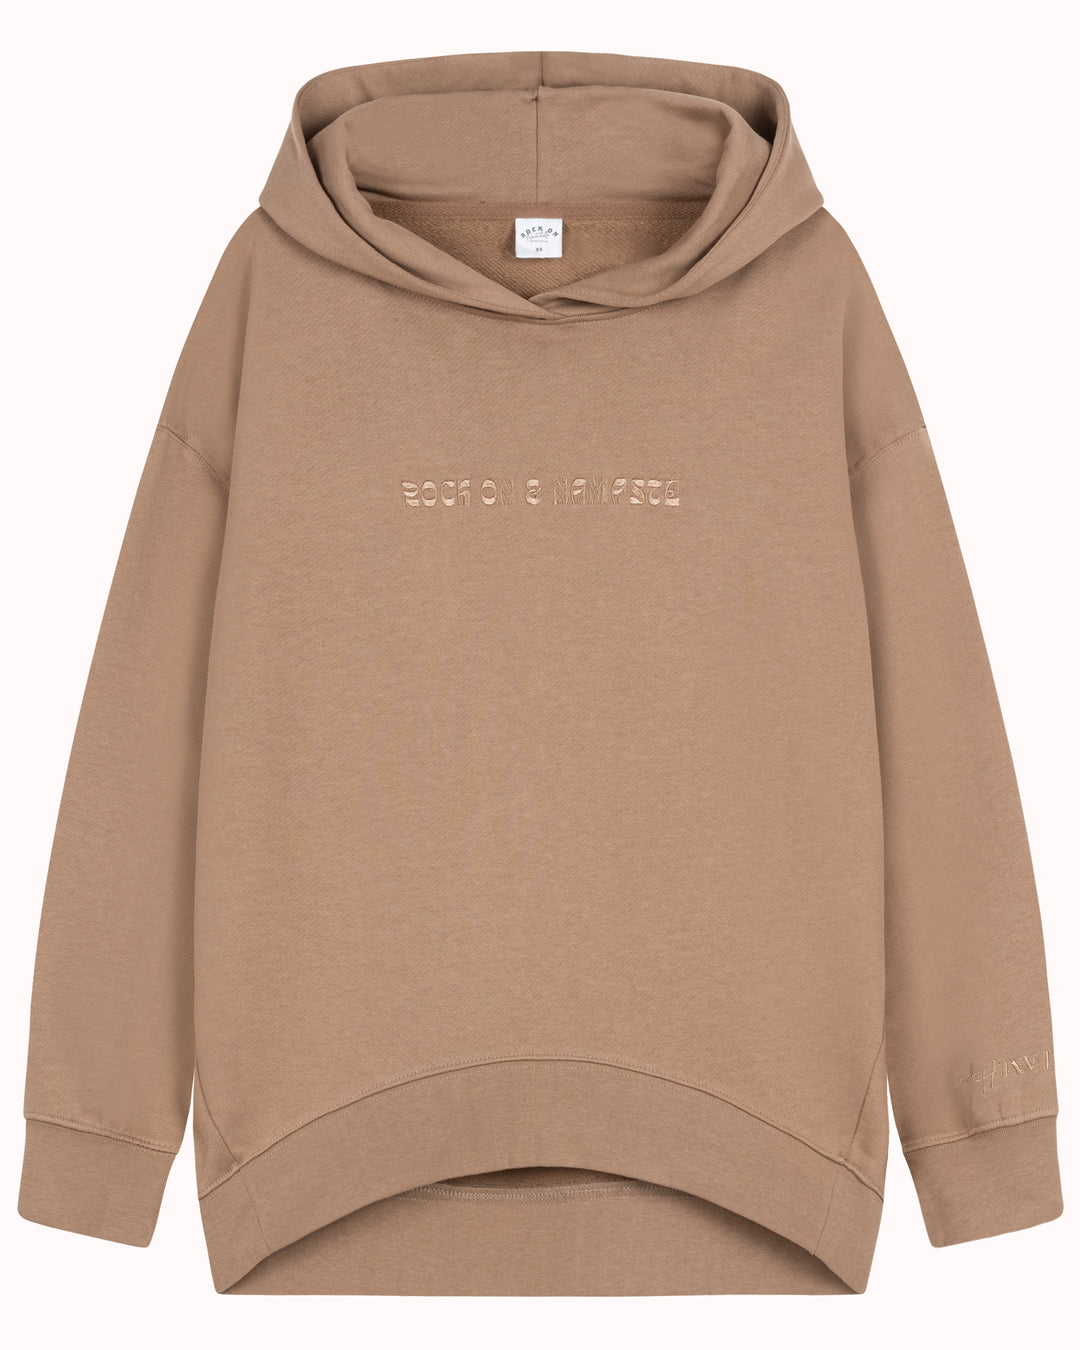 HOPE Hooded Sweatshirt (choco)